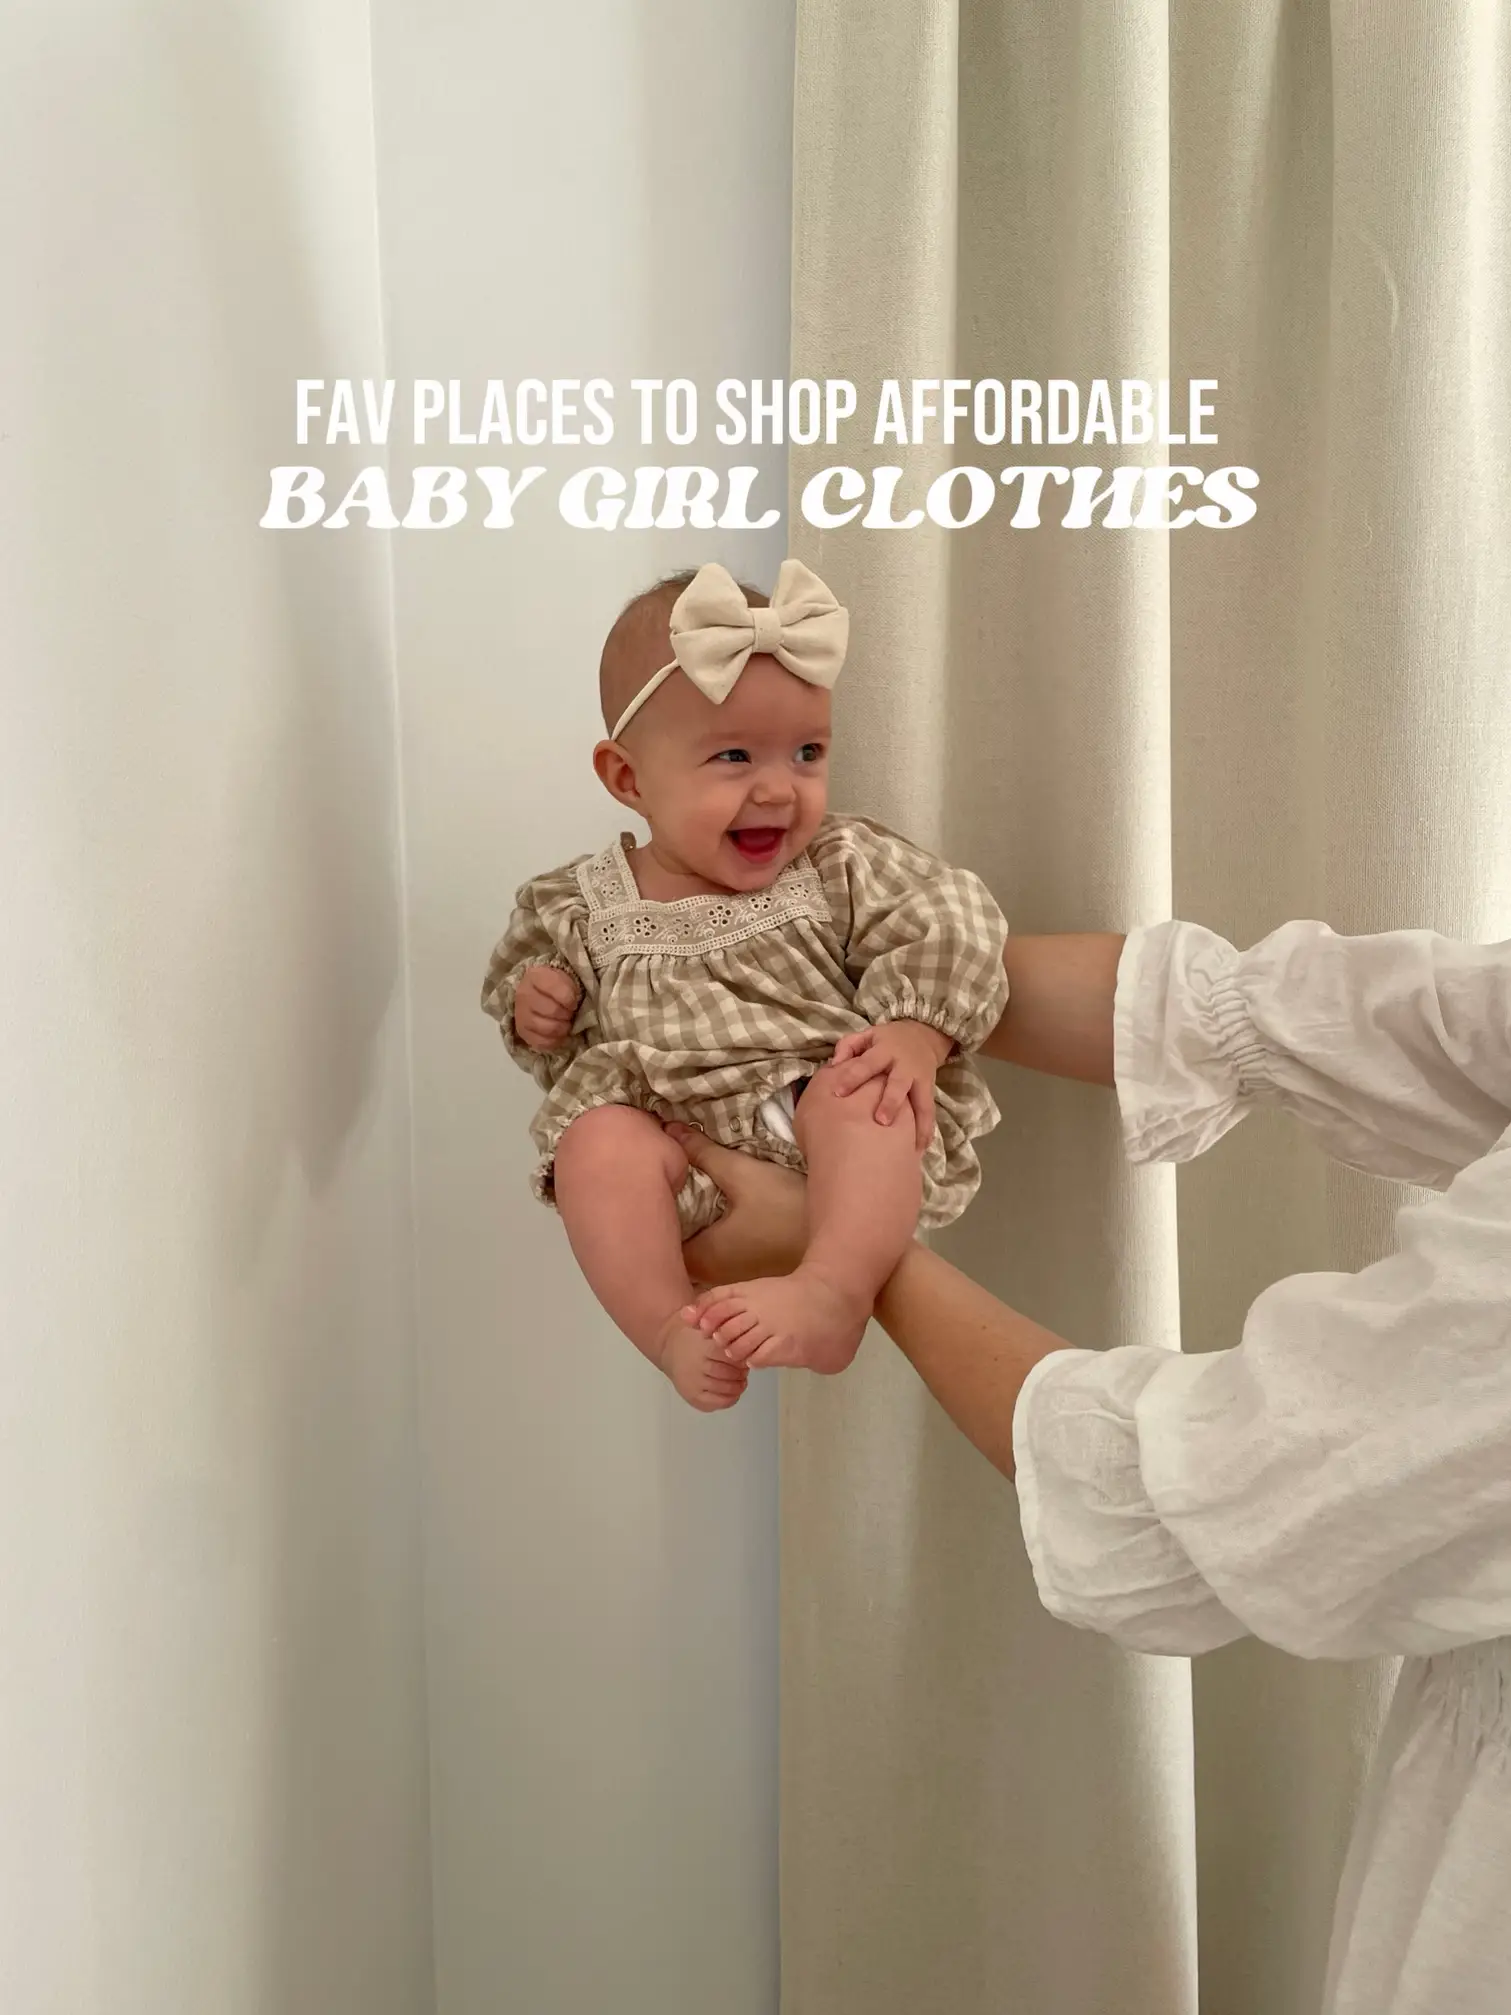 Cheap baby clothes online through Walmart - Lemon8 Search